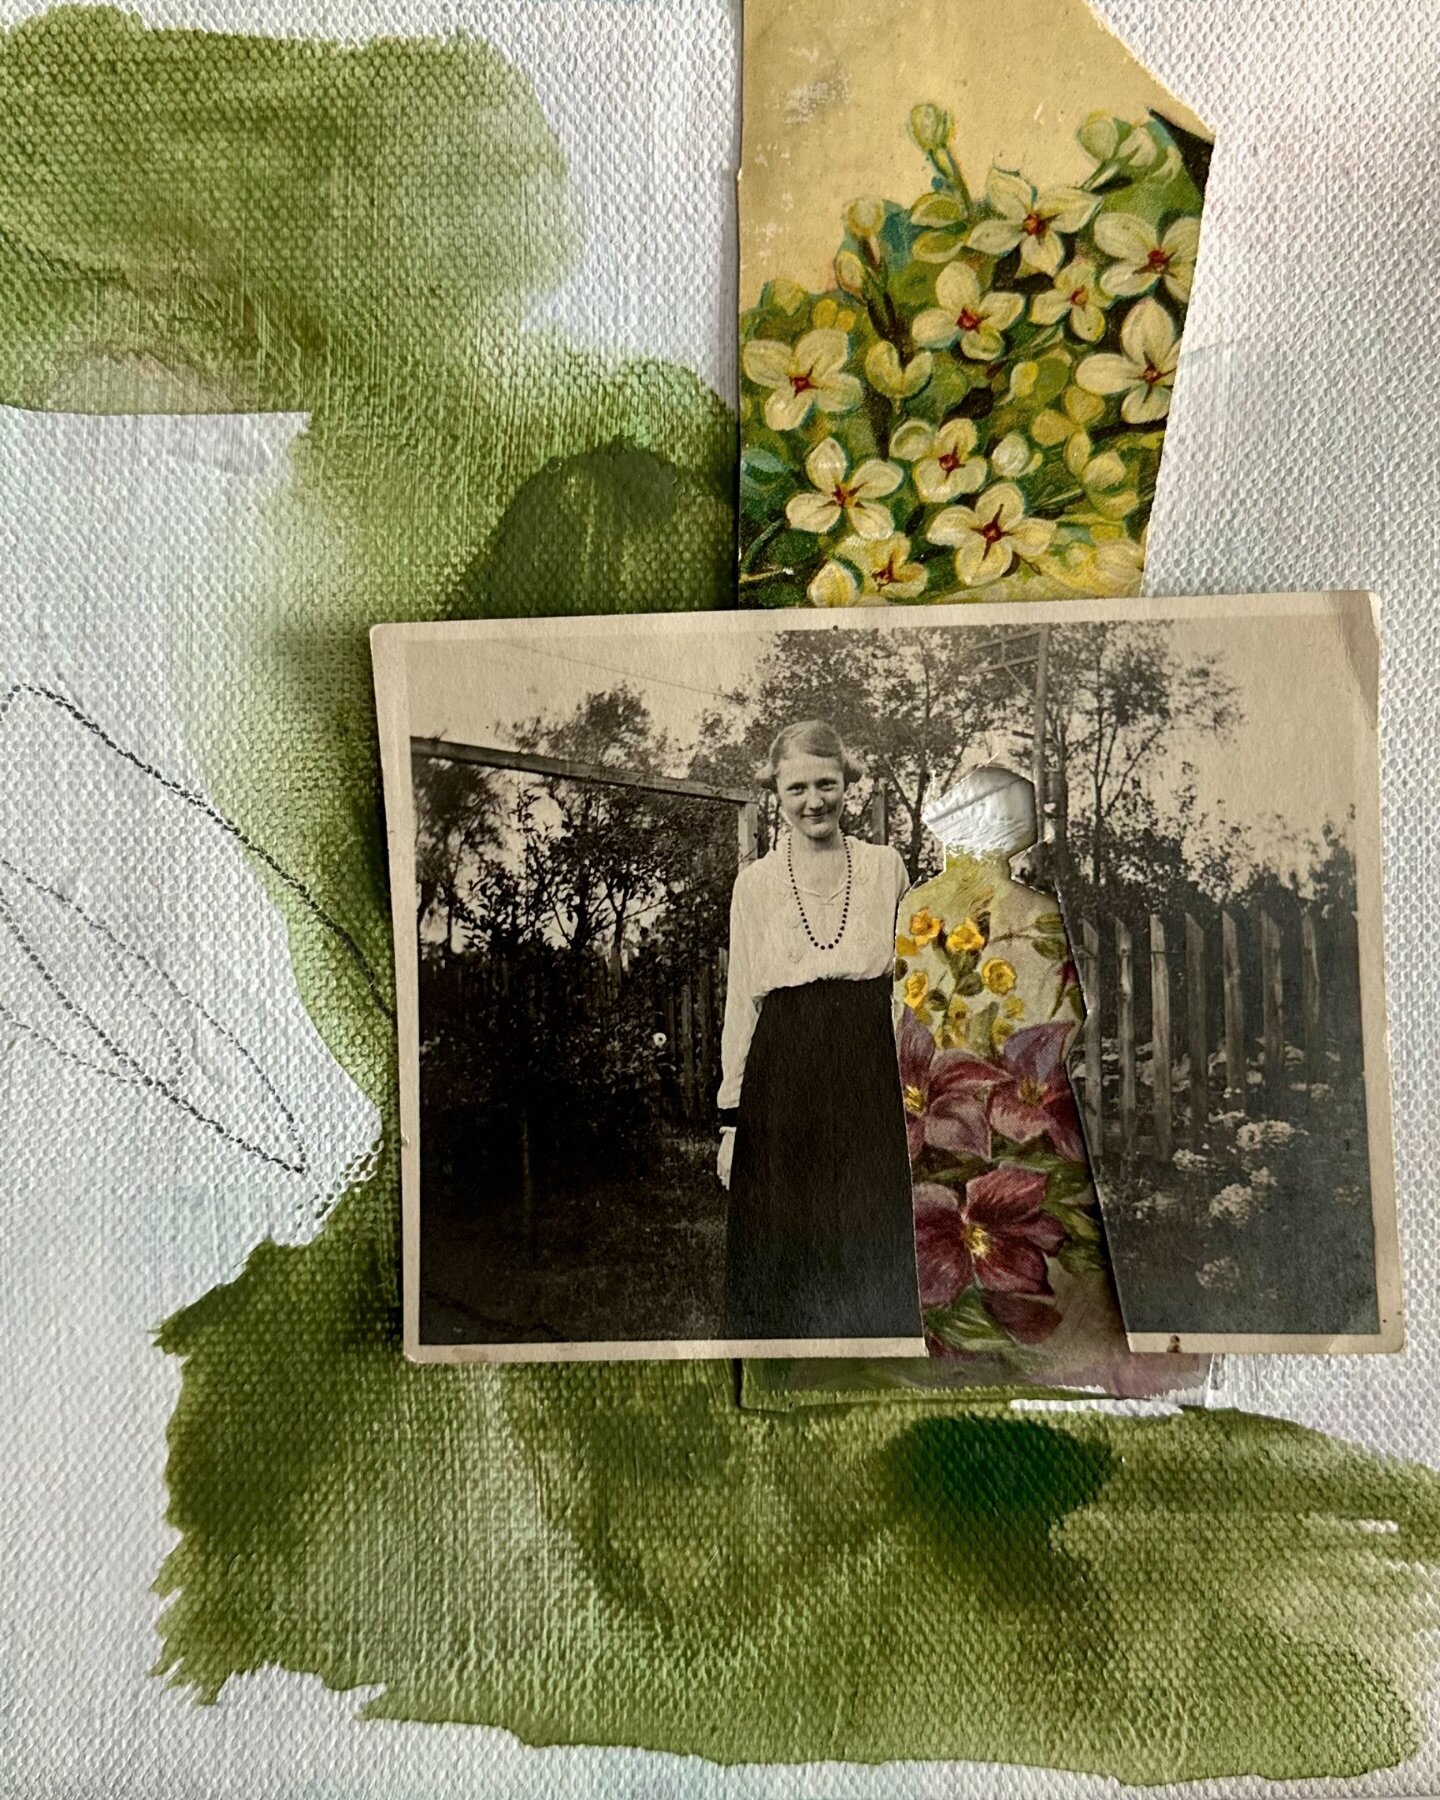 8x8 collage on canvas #wip 💚

__
#joypatrice #analogcollage #collage #healingart #jolieholland #mixedmedia #mixedmediacollage #vintageephemera #vintagephoto #womenartists